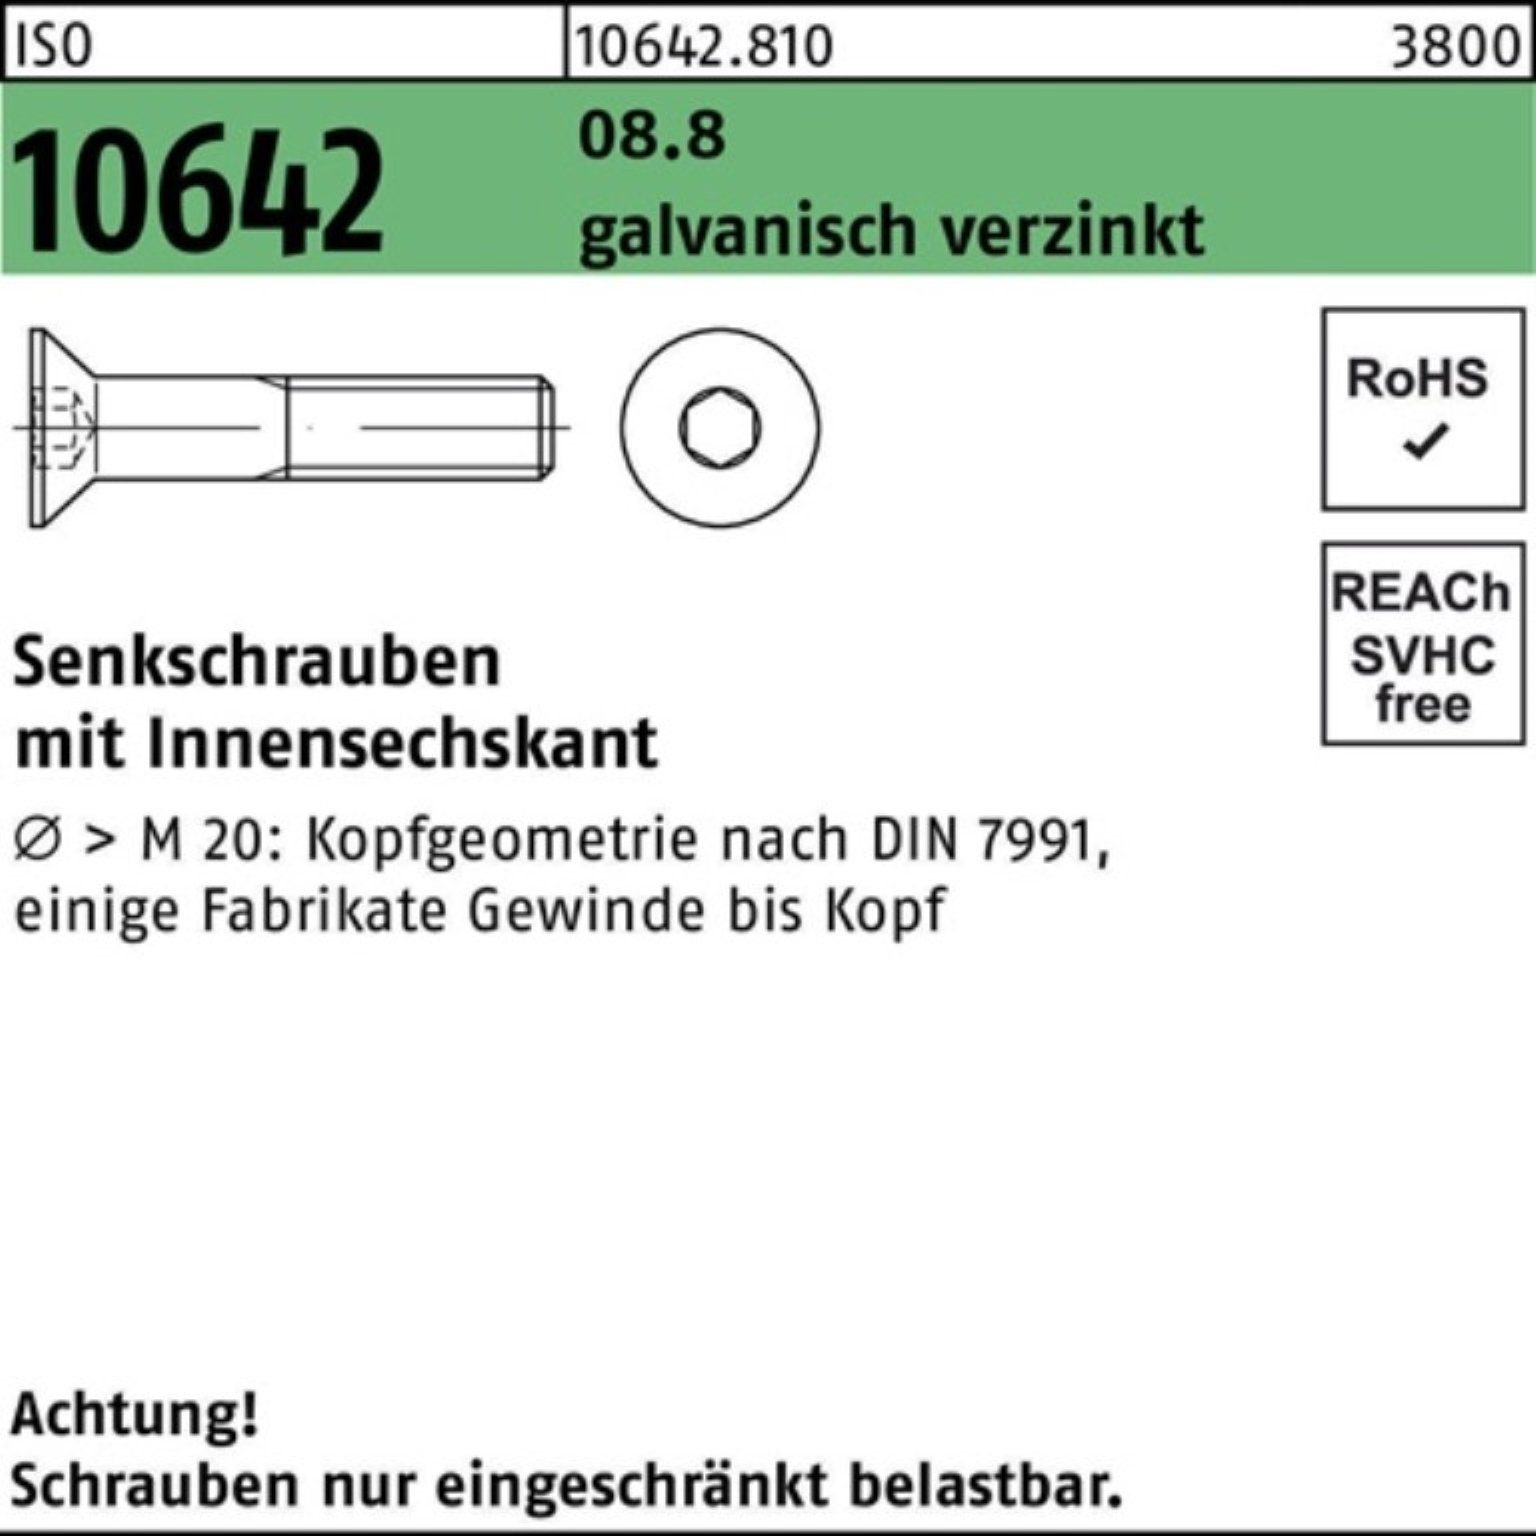 ISO Senkschraube Innen-6kt 8.8 55 galv.verz. Reyher Pack 200 M5x Senkschraube 10642 200er